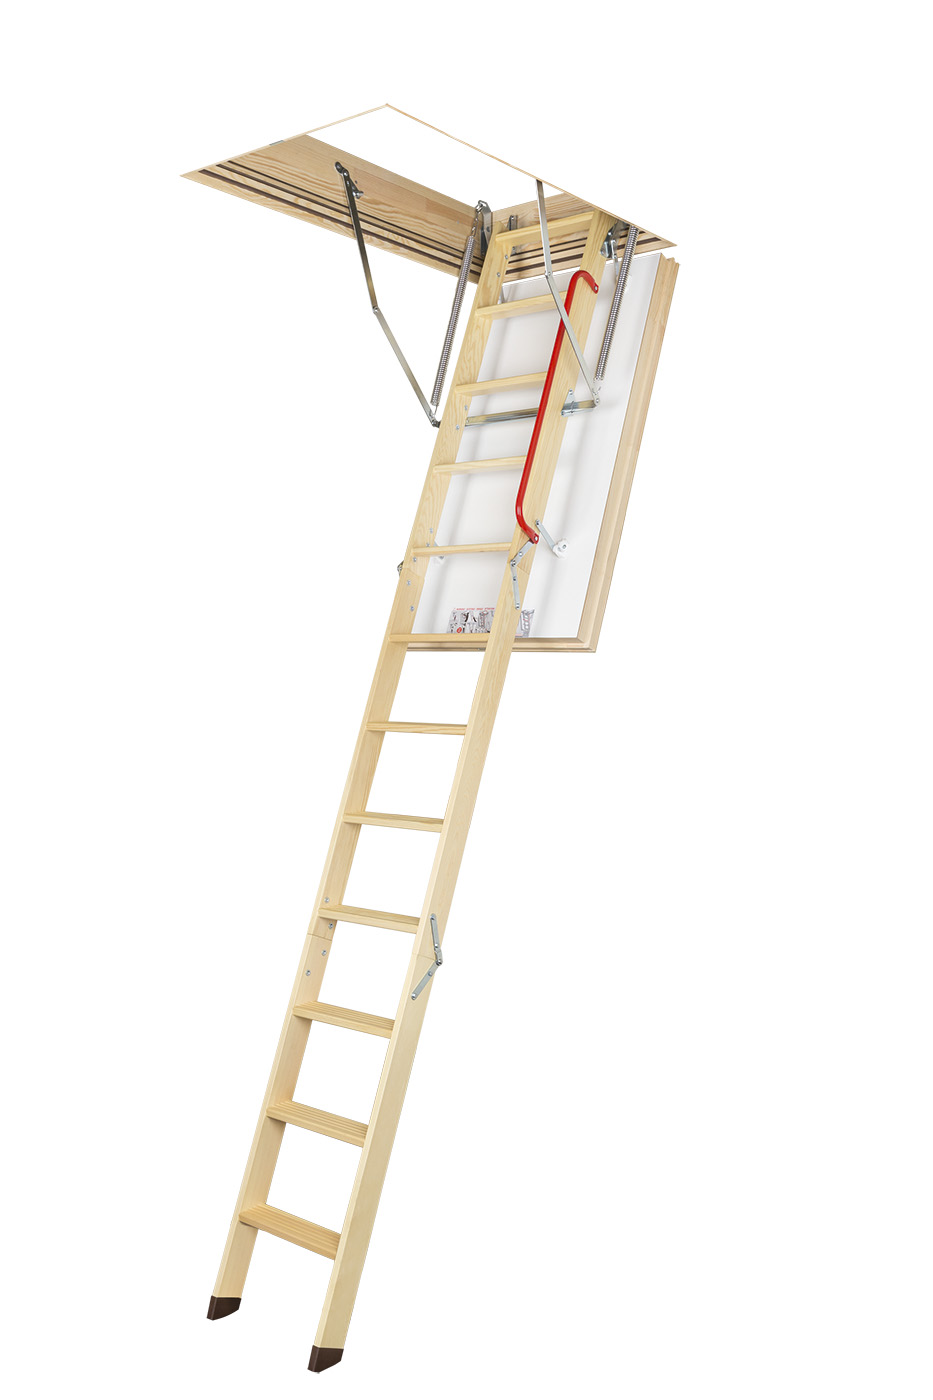 Fakro LWT 60х120x280см деревянная суперэнергосберегающая чердачная лестница (Факро), Лестница чердачная LWT 60х120х280 Fakro